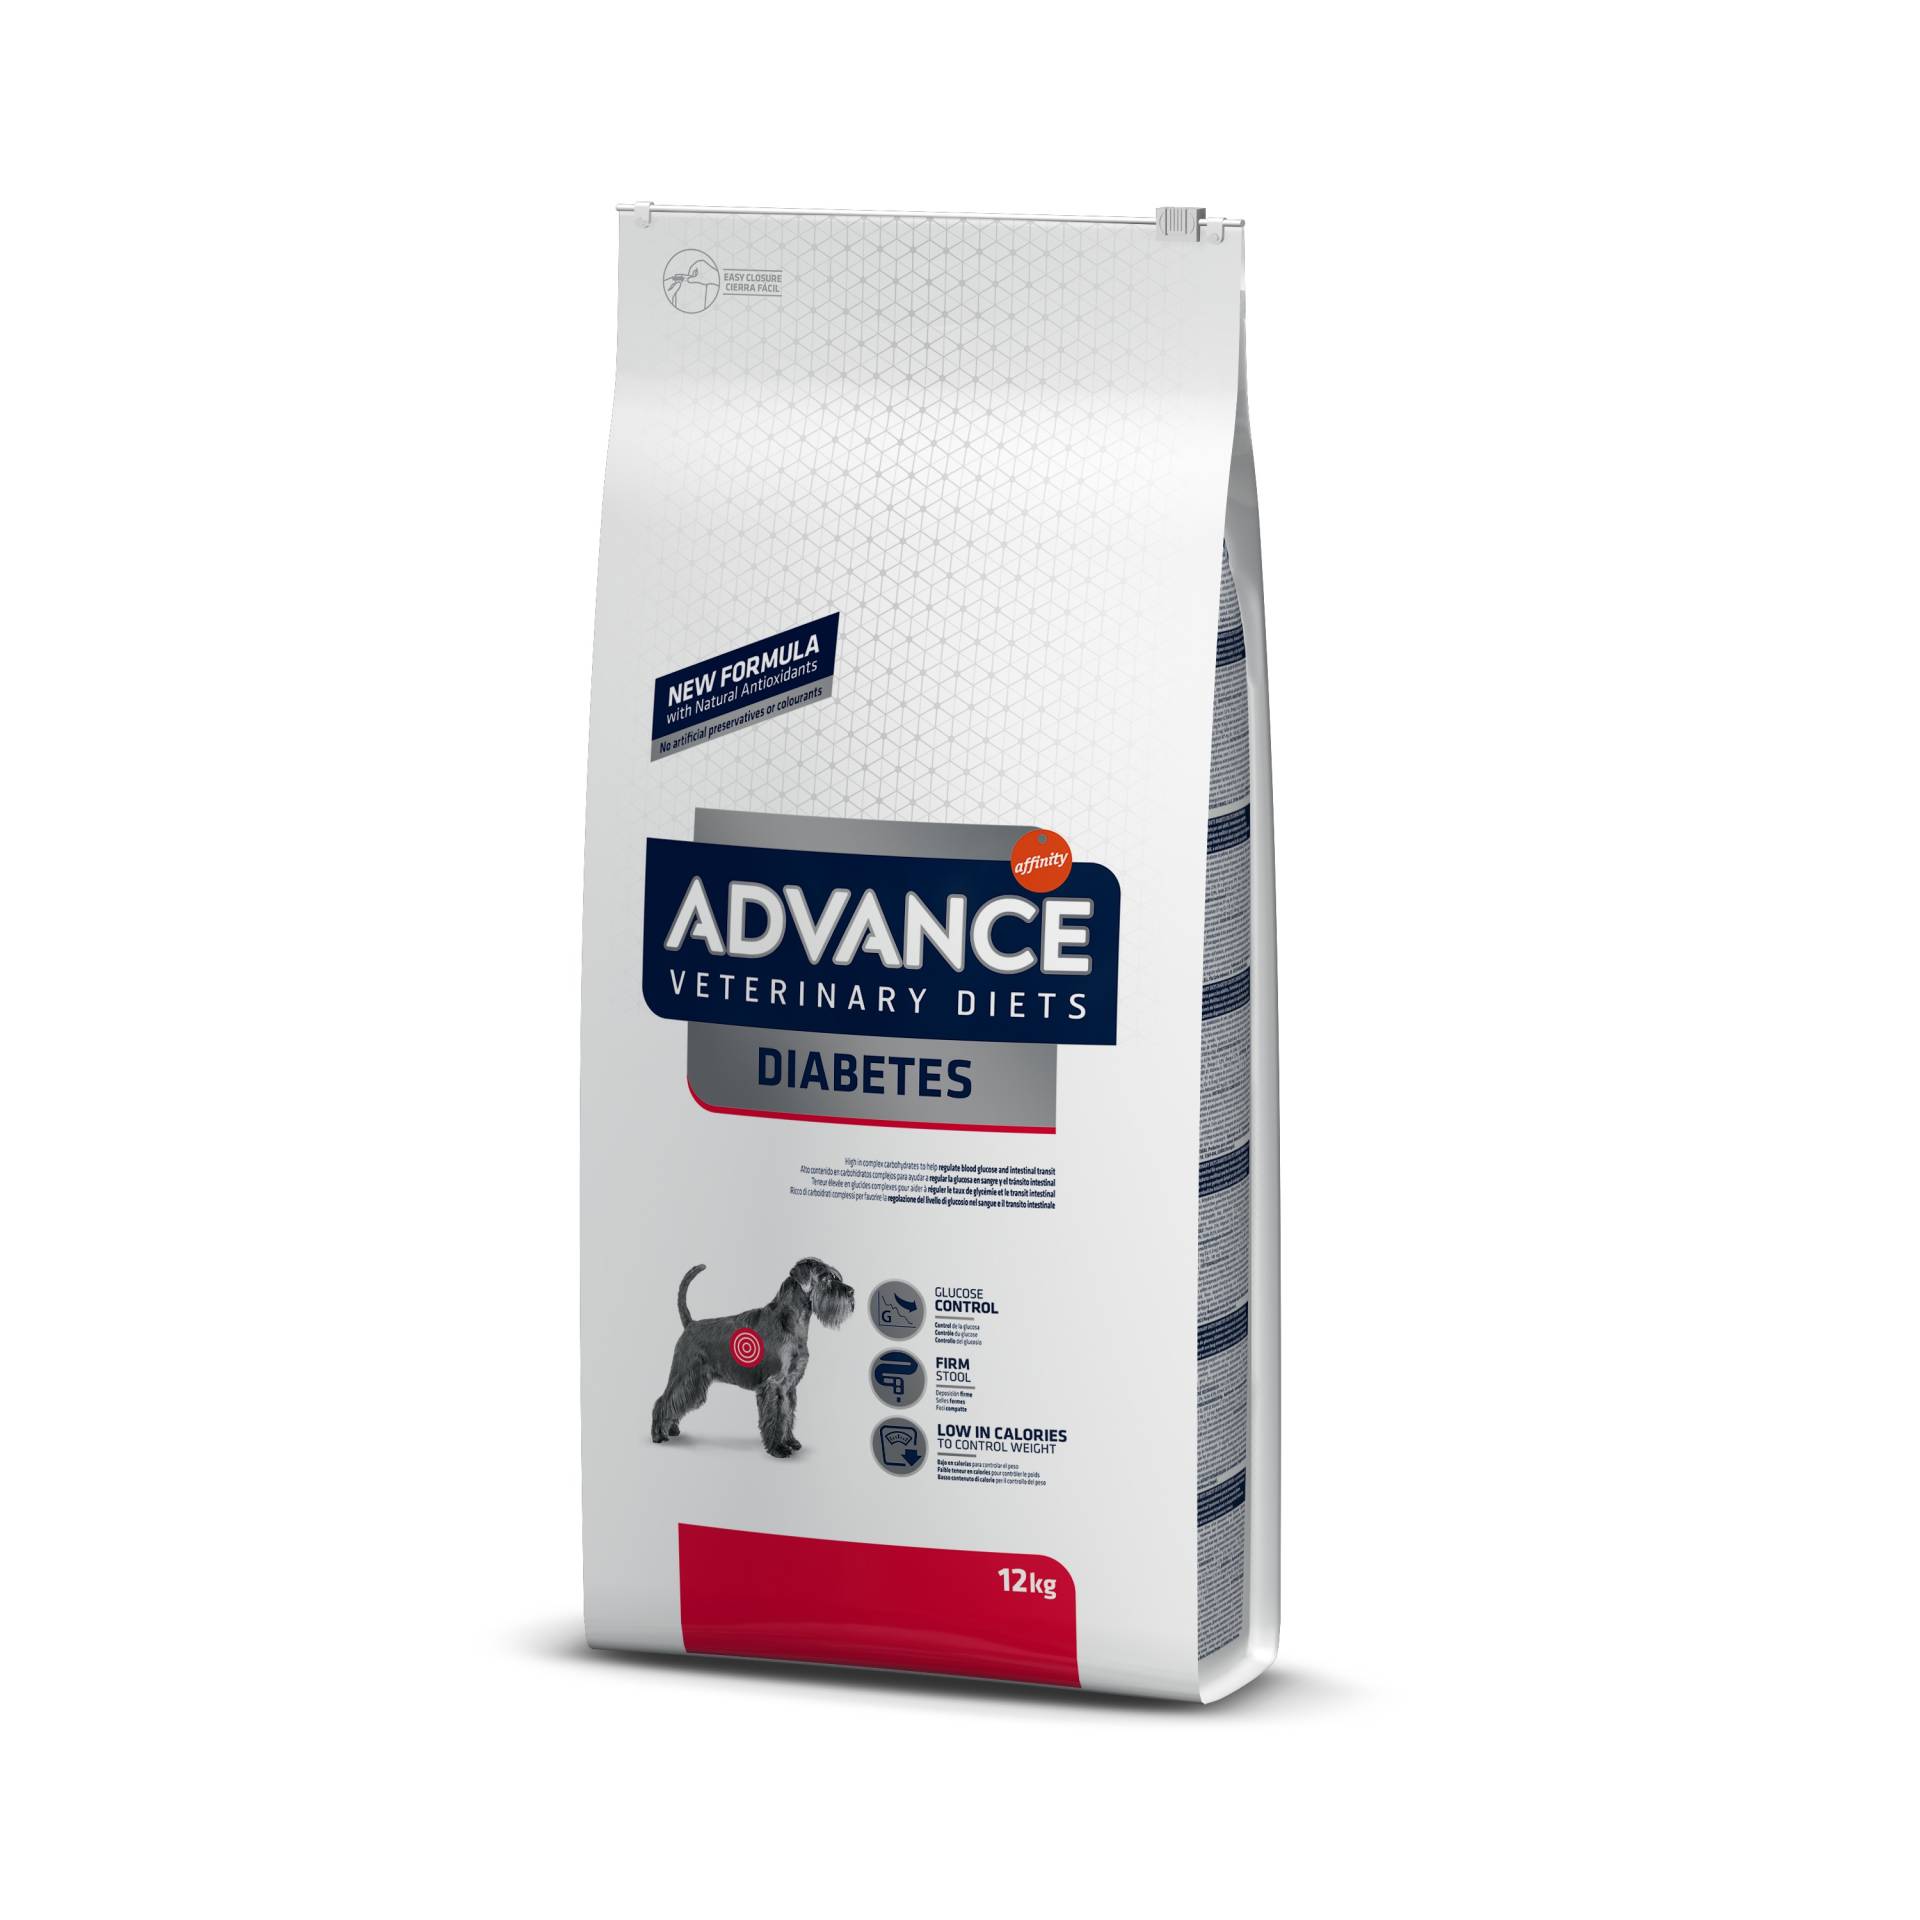 Advance Veterinary Diets Diabetes - 12 kg von Affinity Advance Veterinary Diets